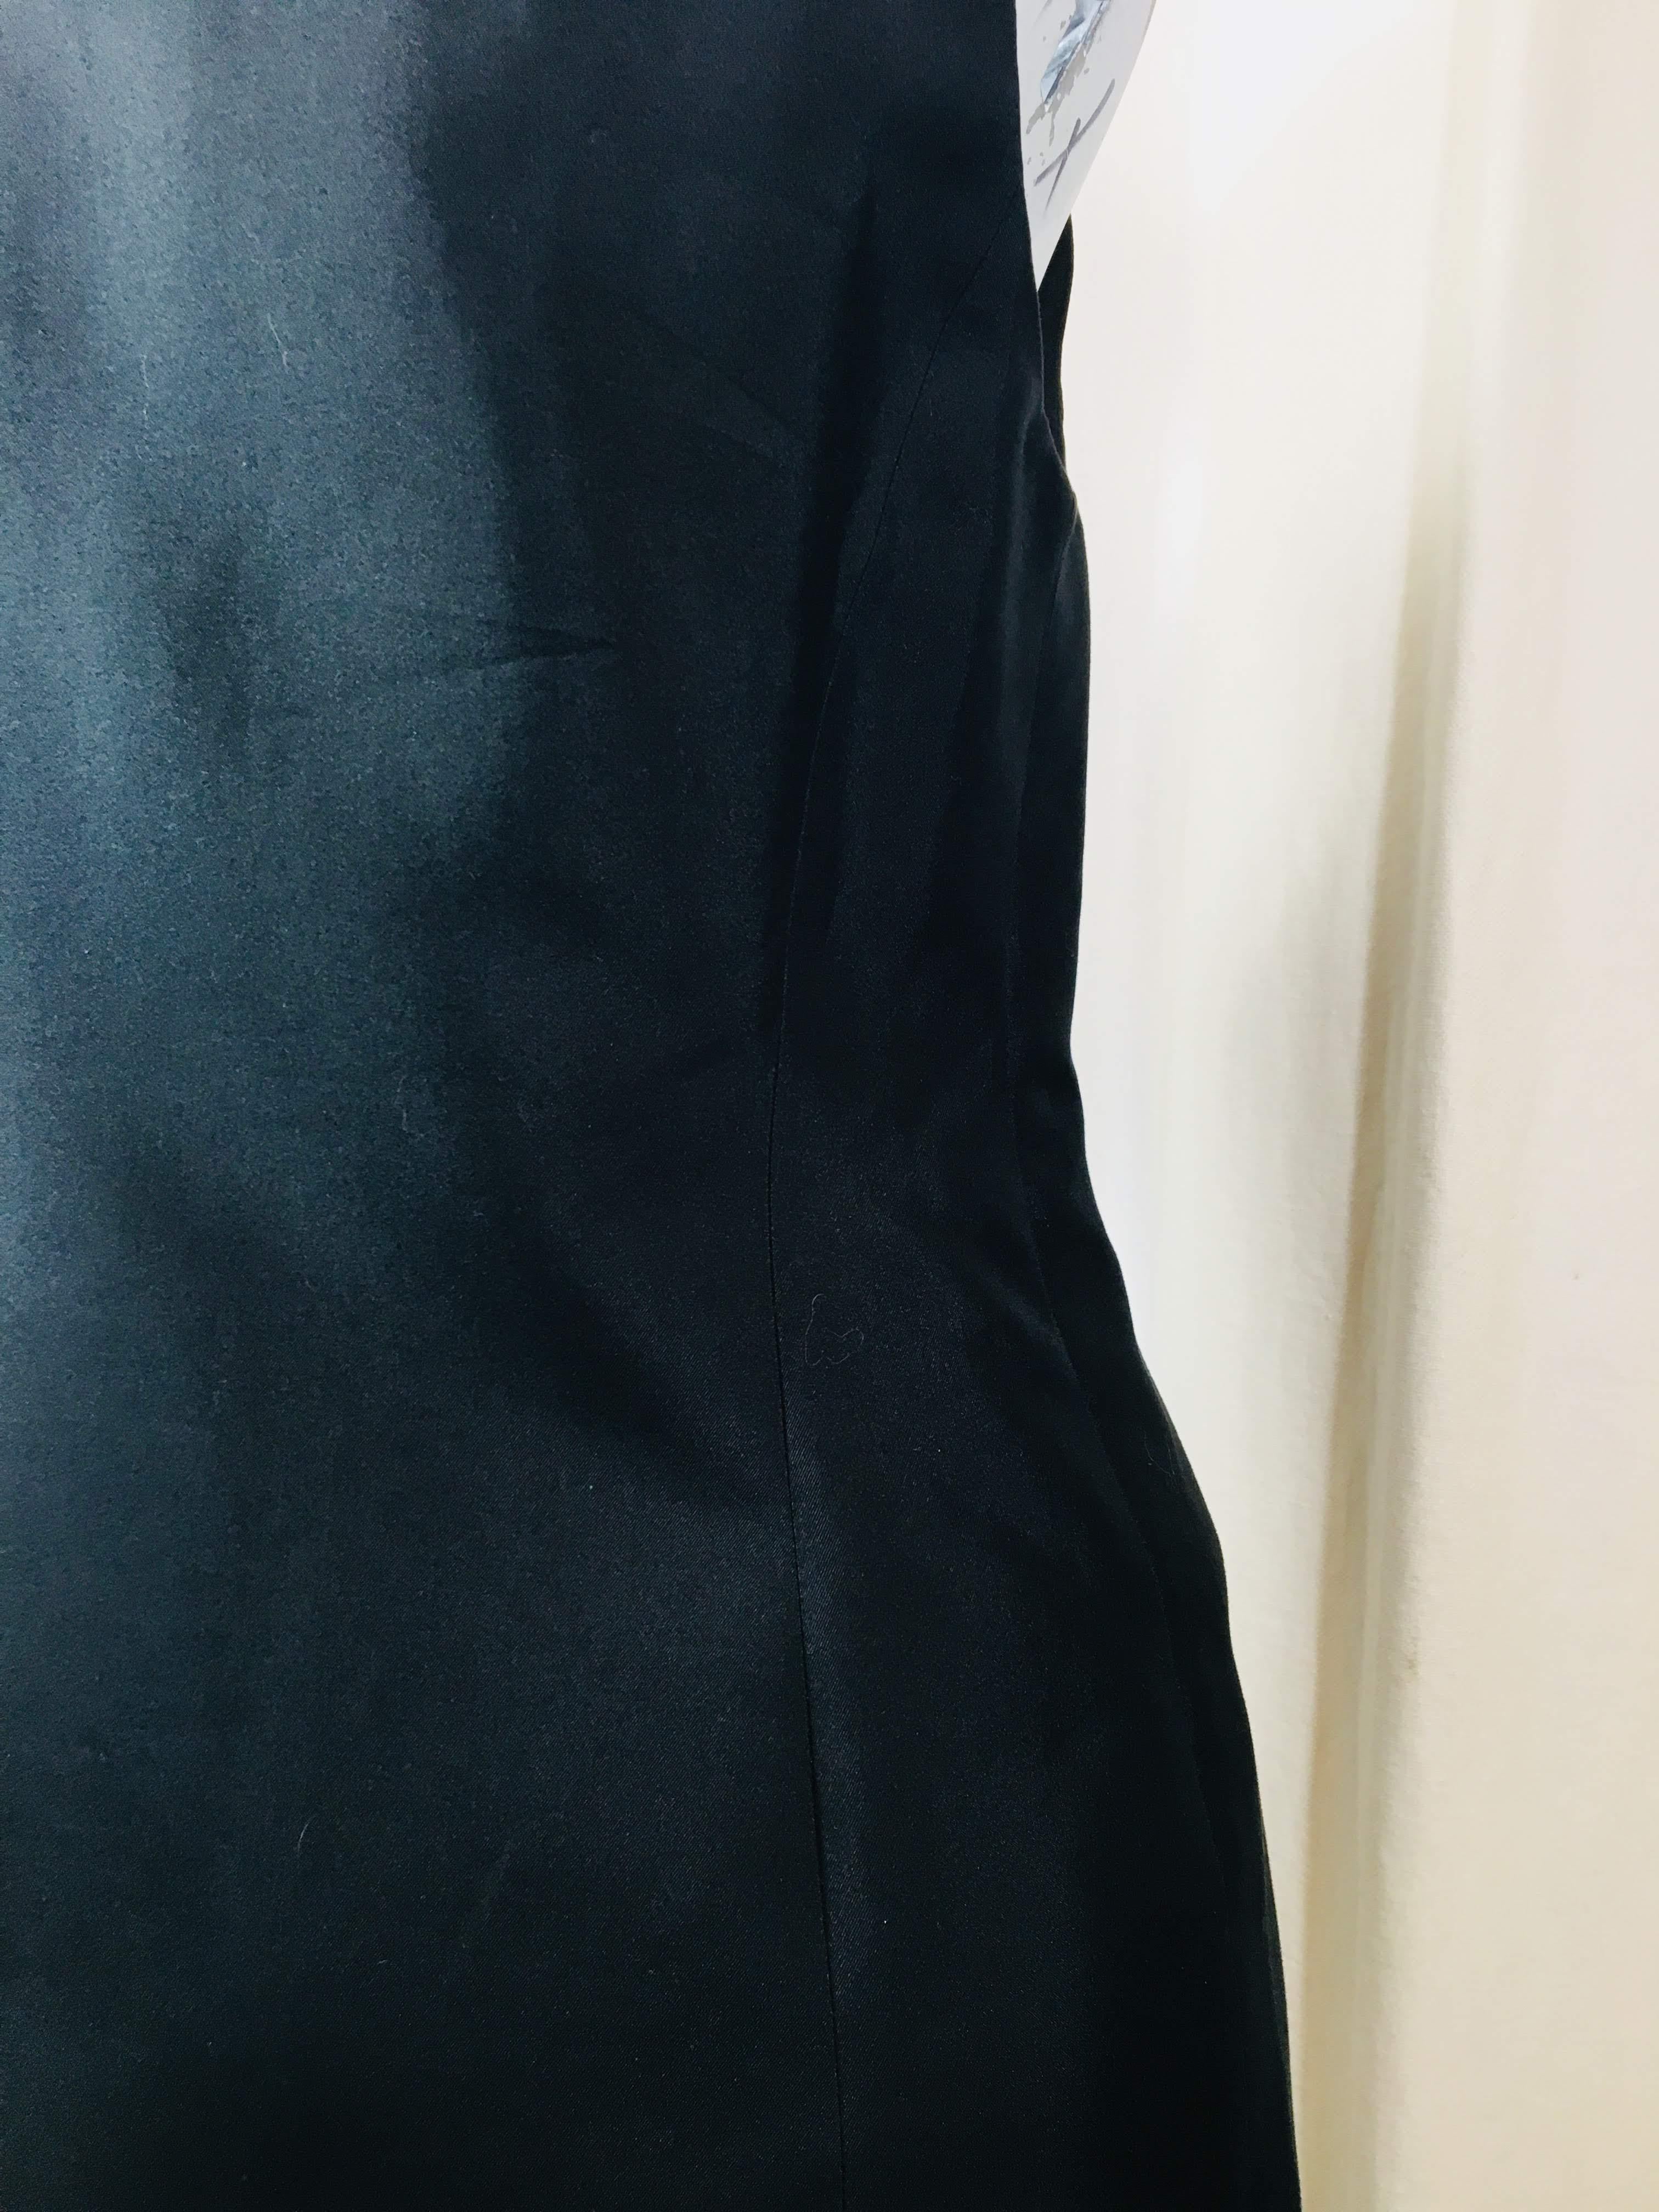 Prada Black  Sleeveless Dress  3